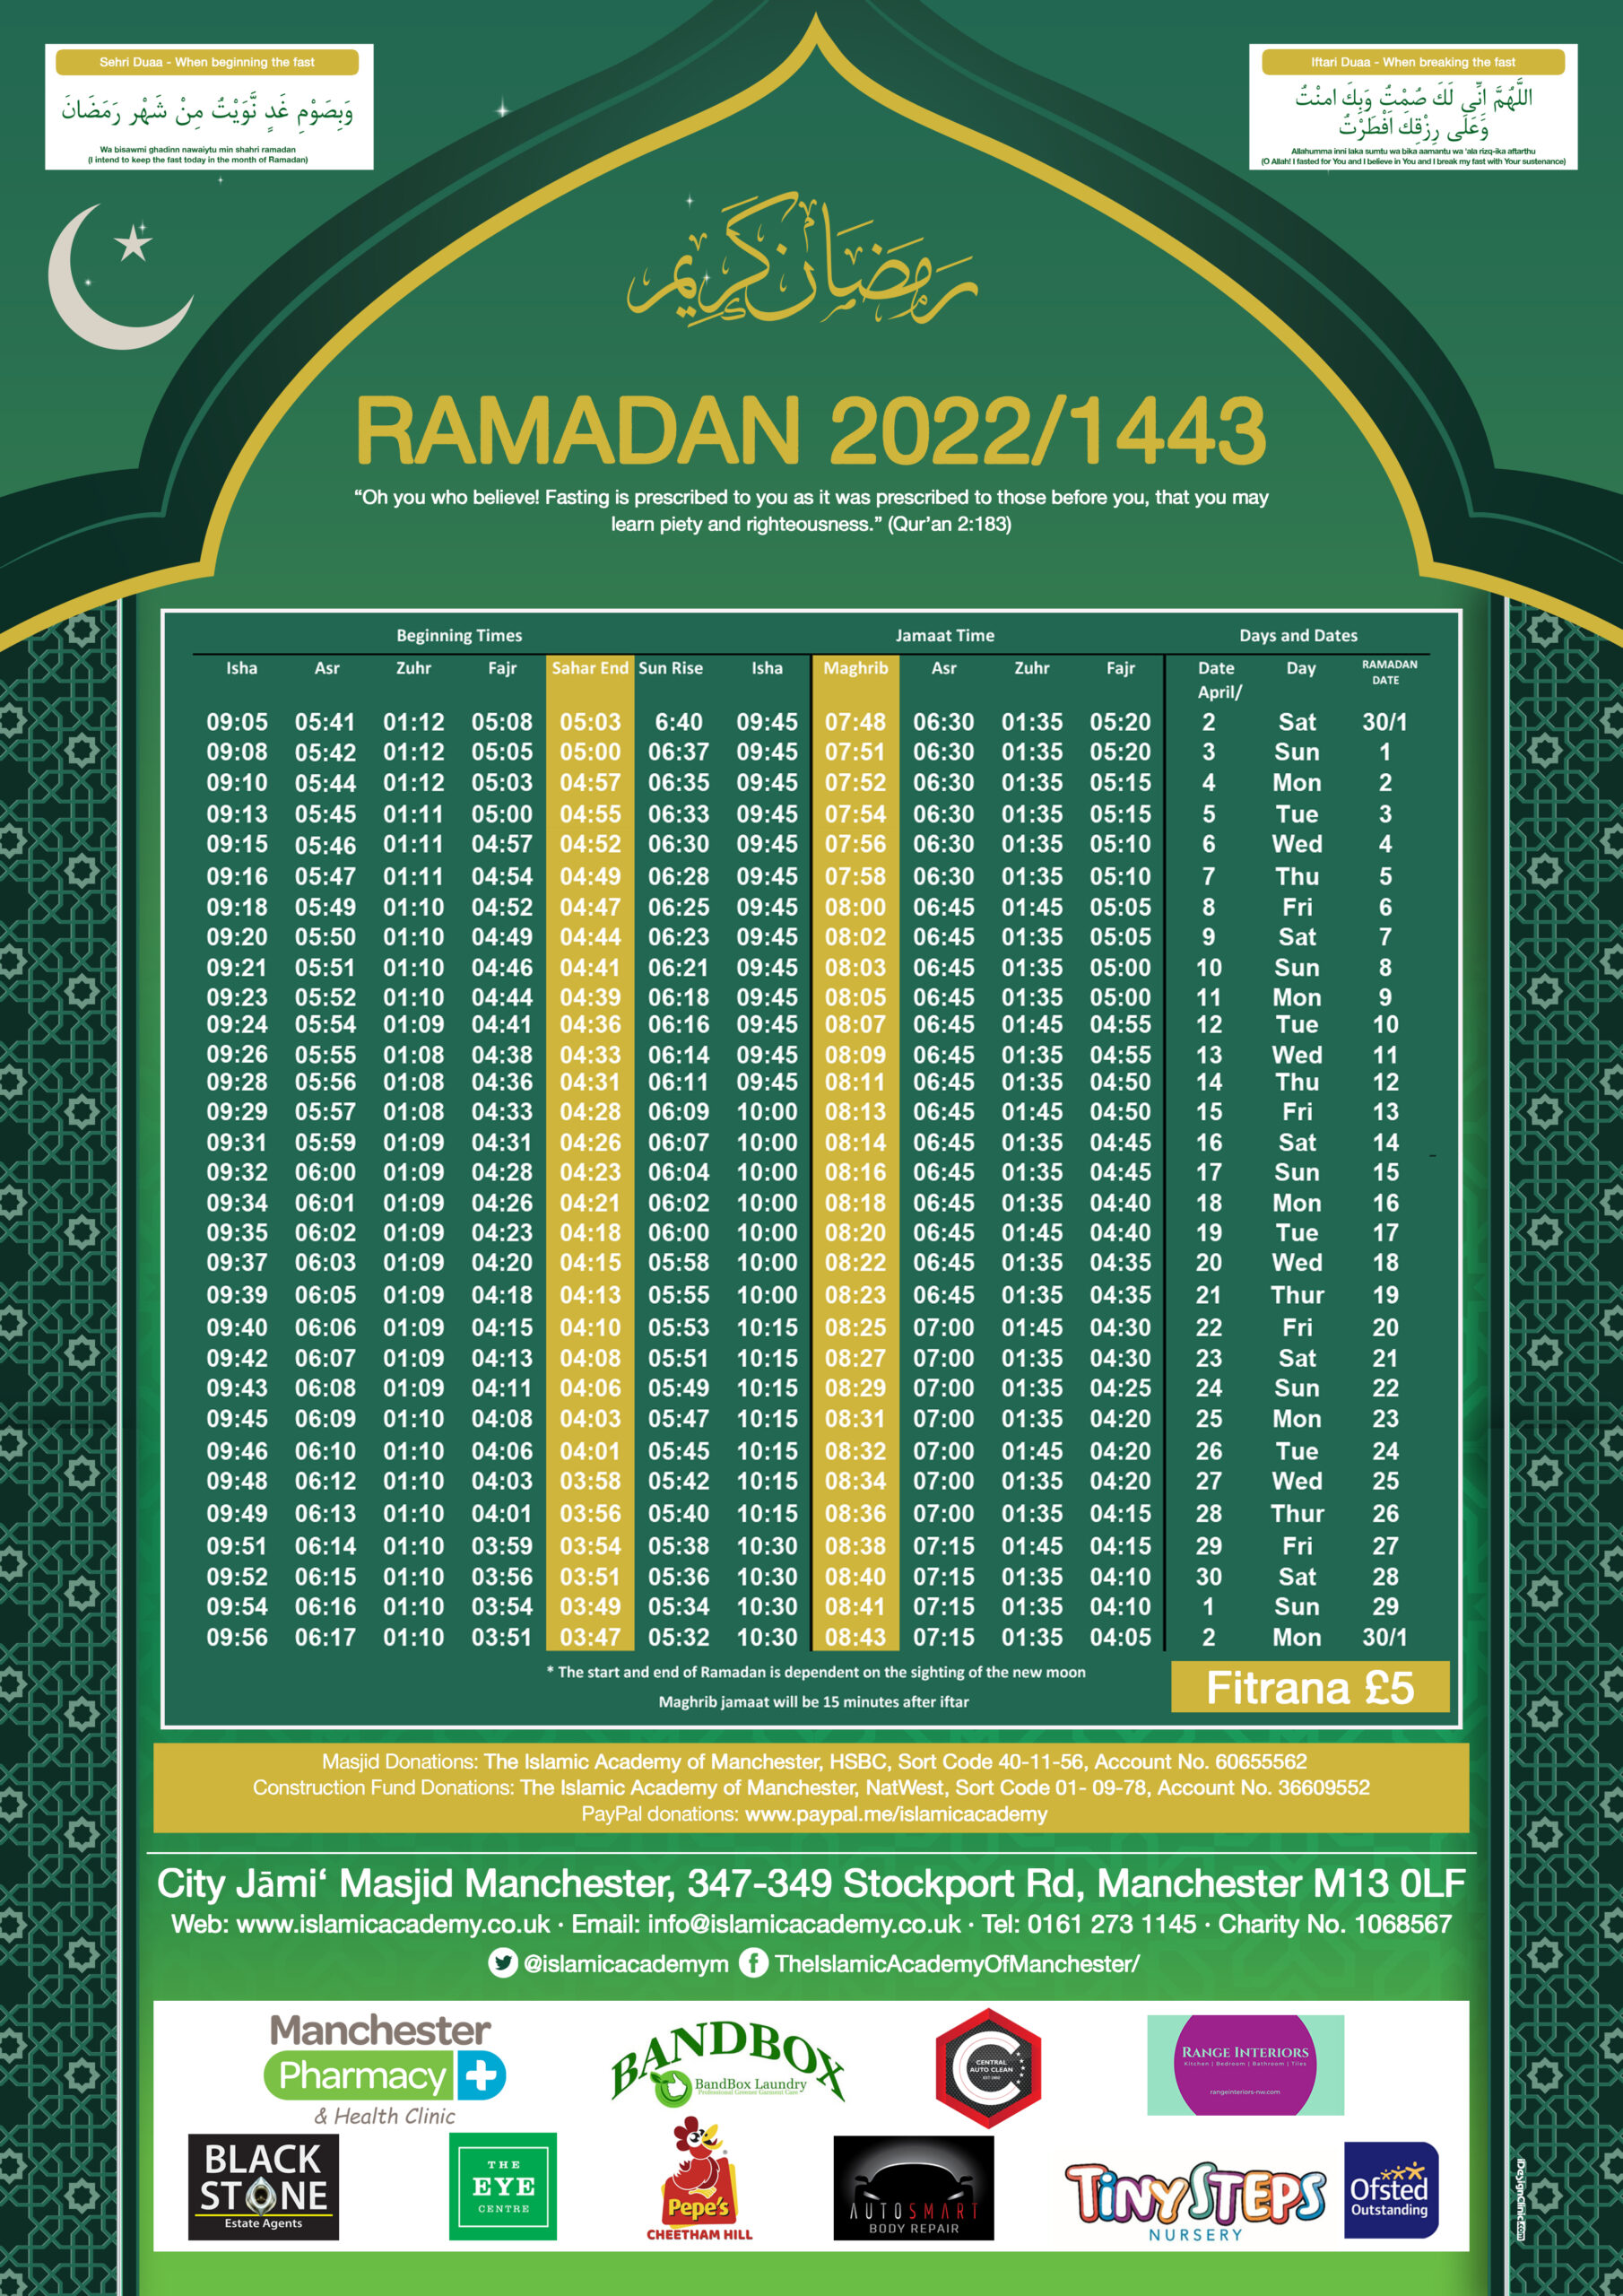 Ramadan 2022 Prayer Timetable The Islamic Academy of Manchester